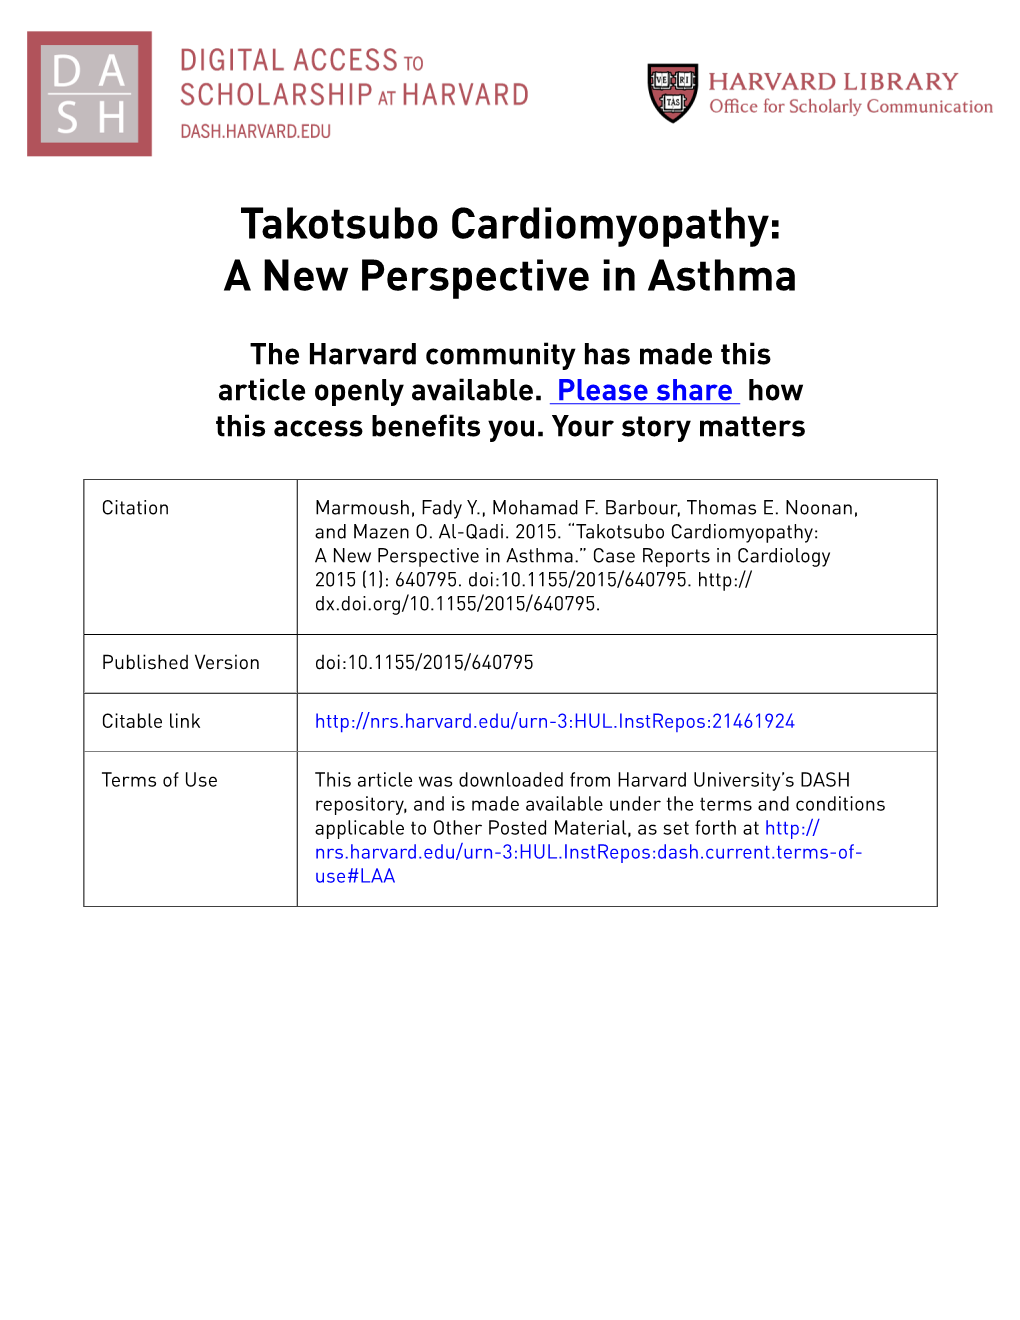 Takotsubo Cardiomyopathy: a New Perspective in Asthma